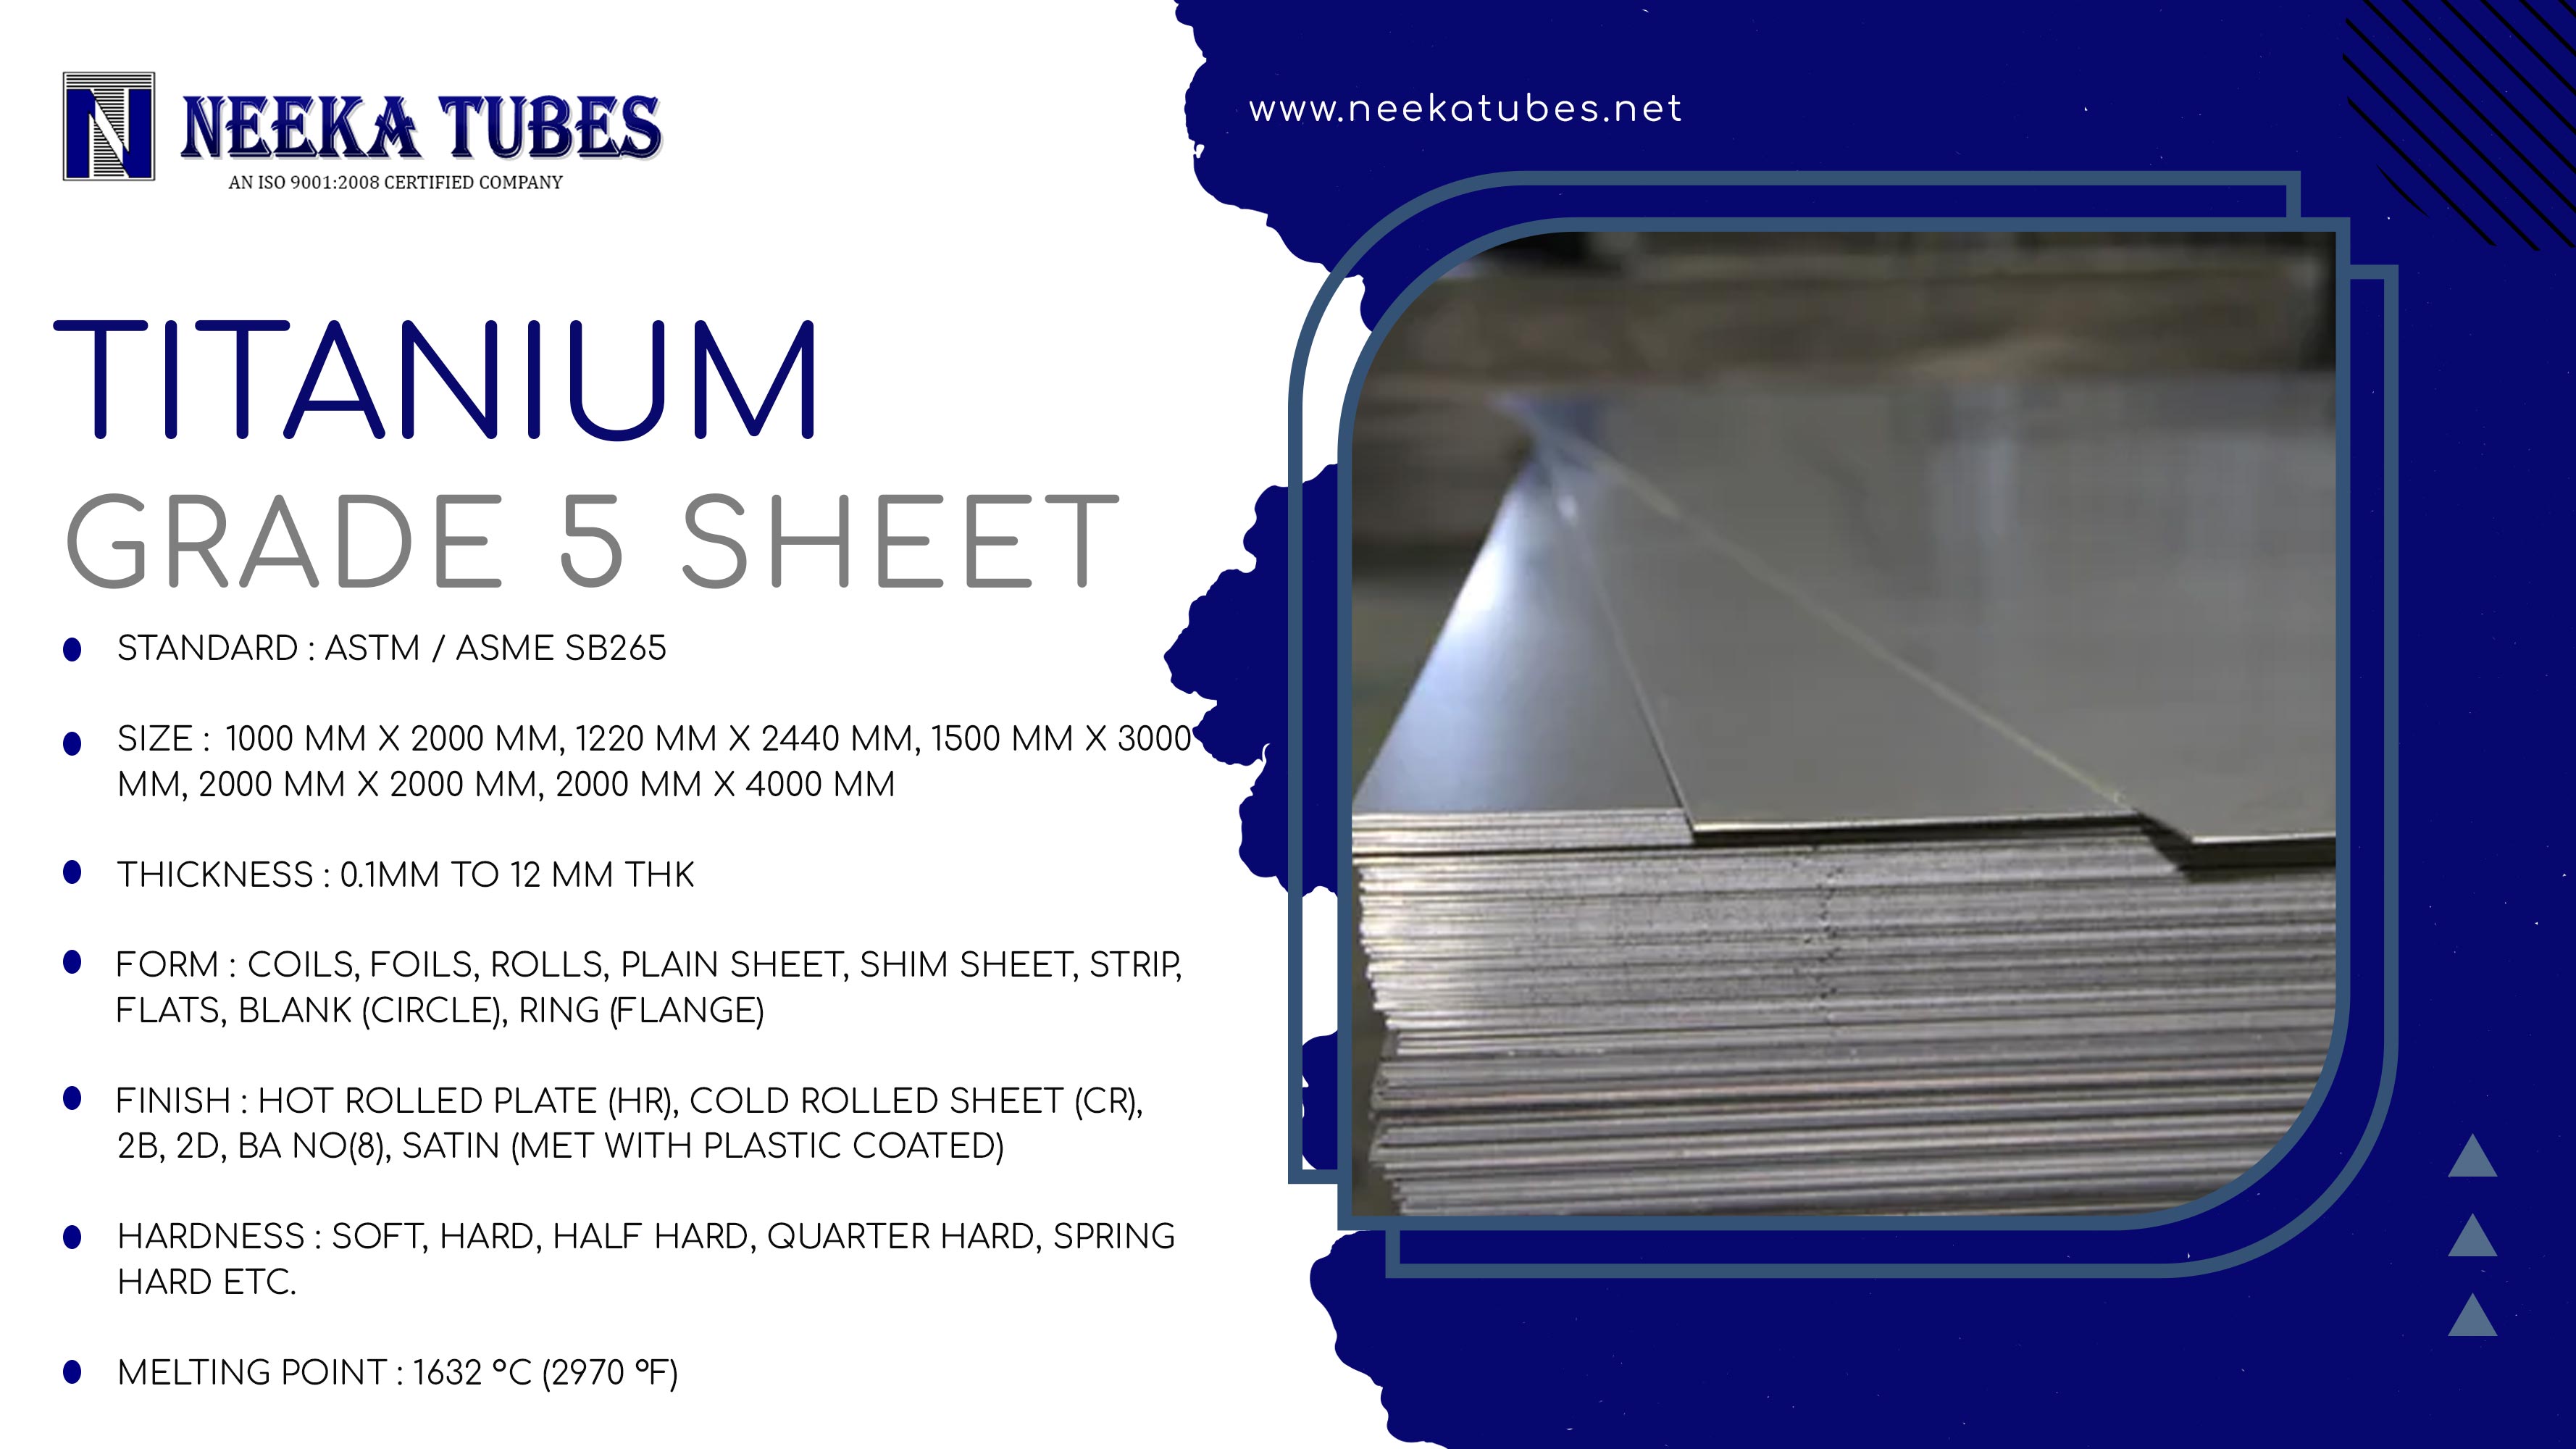 Tittanium grade 5 sheet specification